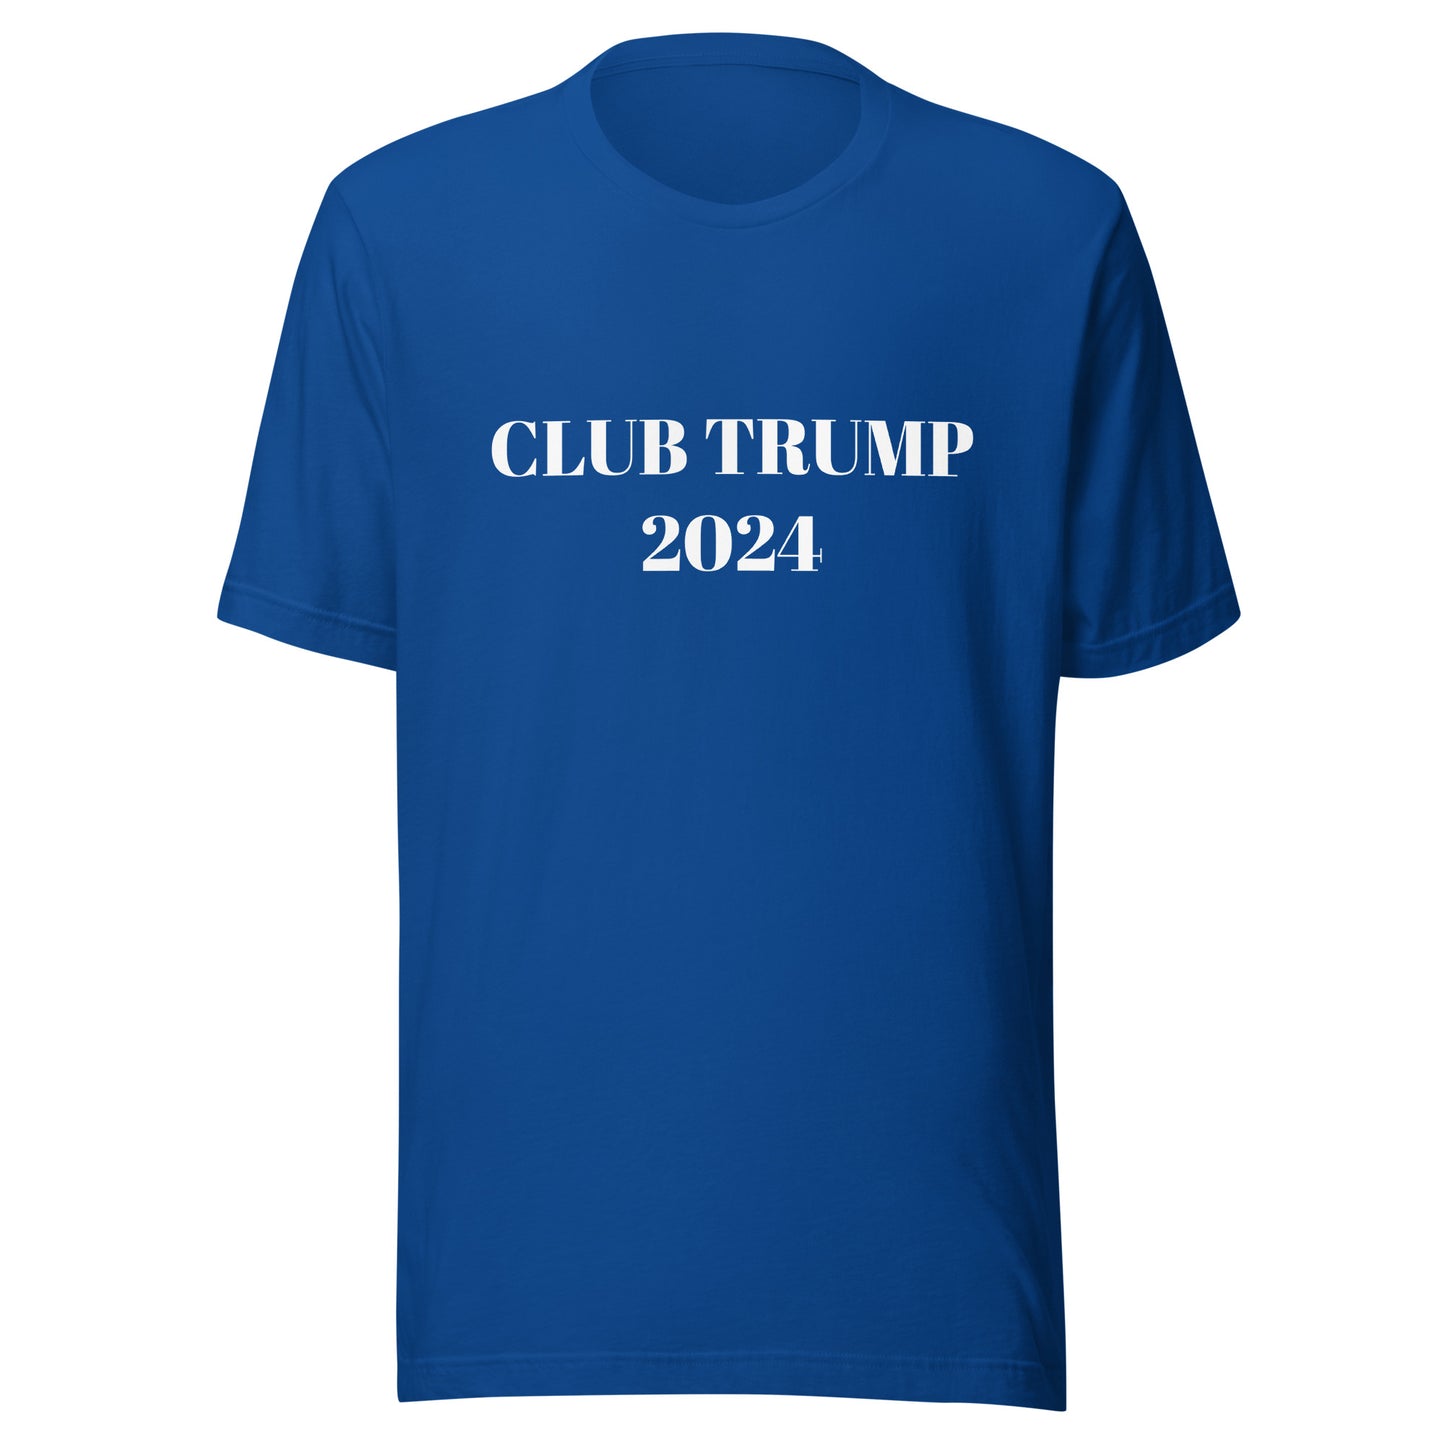 Club Trump 2024!